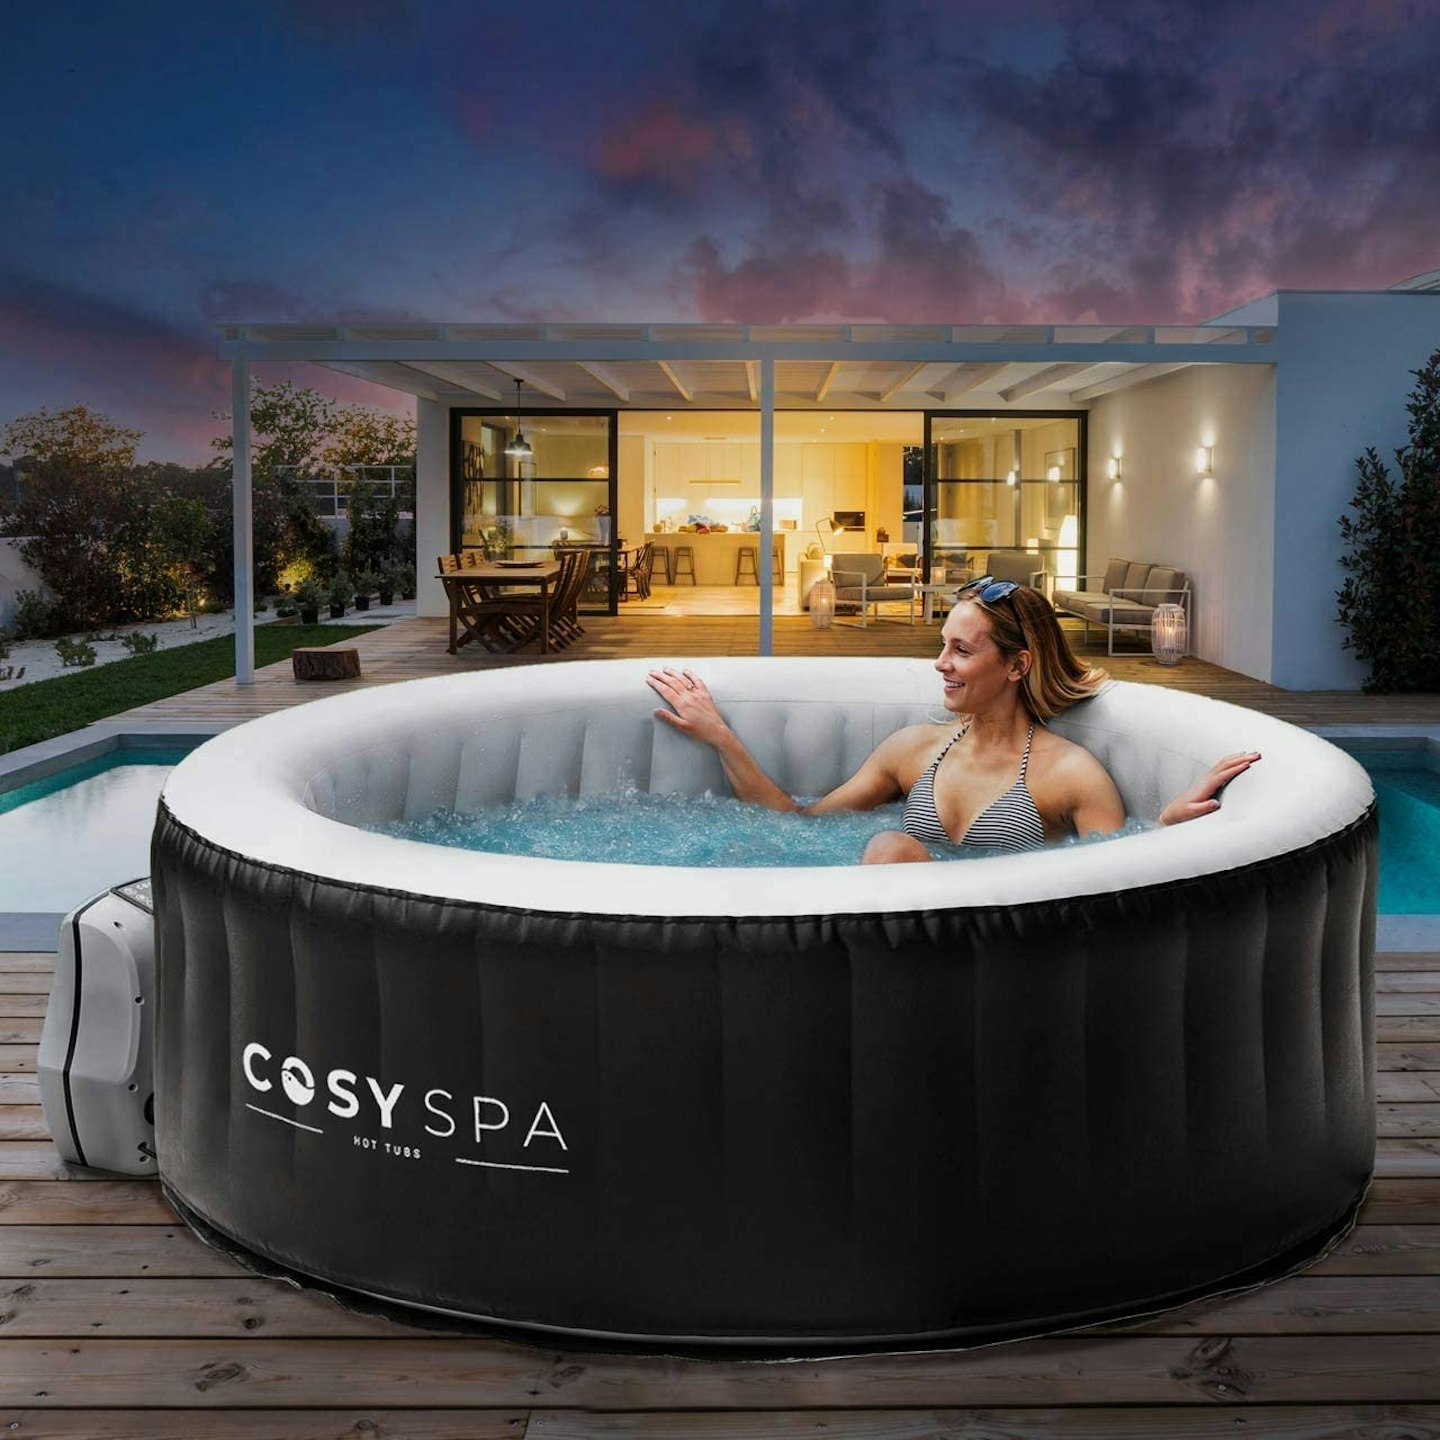 CosySpa Inflatable Hot Tub Spa 2022 Model